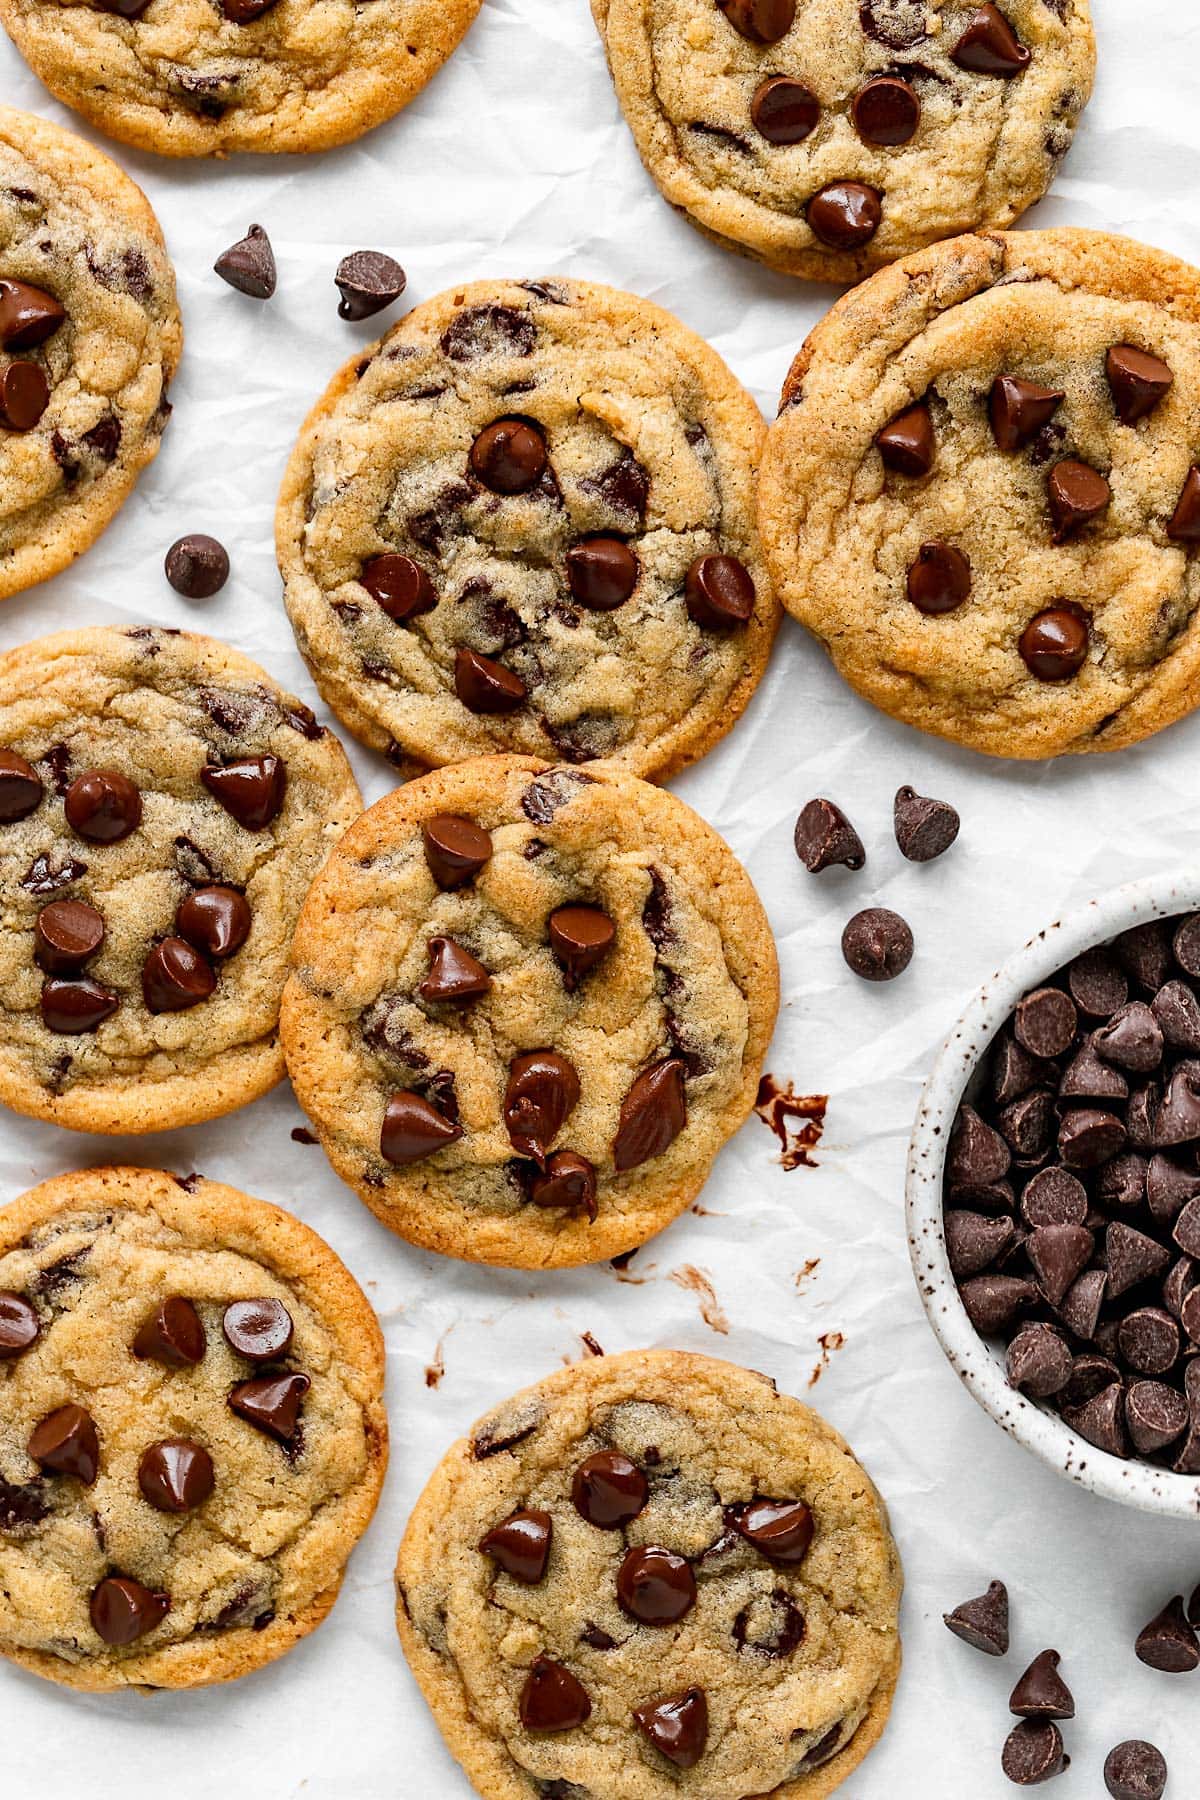 https://www.twopeasandtheirpod.com/wp-content/uploads/2021/06/Vanilla-Pudding-Chocolate-Chip-Cookies-13.jpg